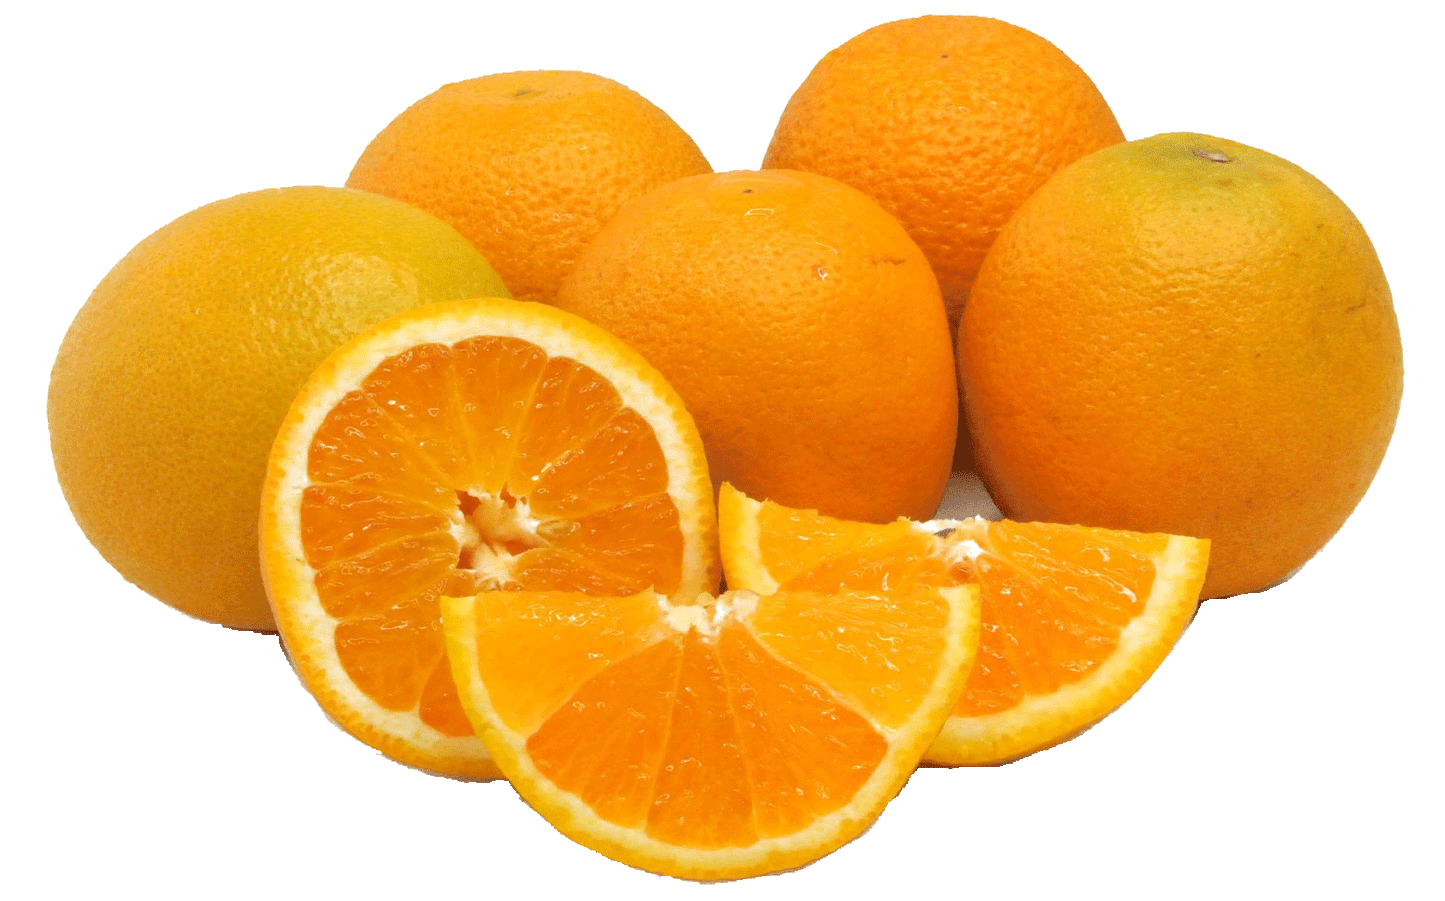 California Valencia Oranges - 5 pounds